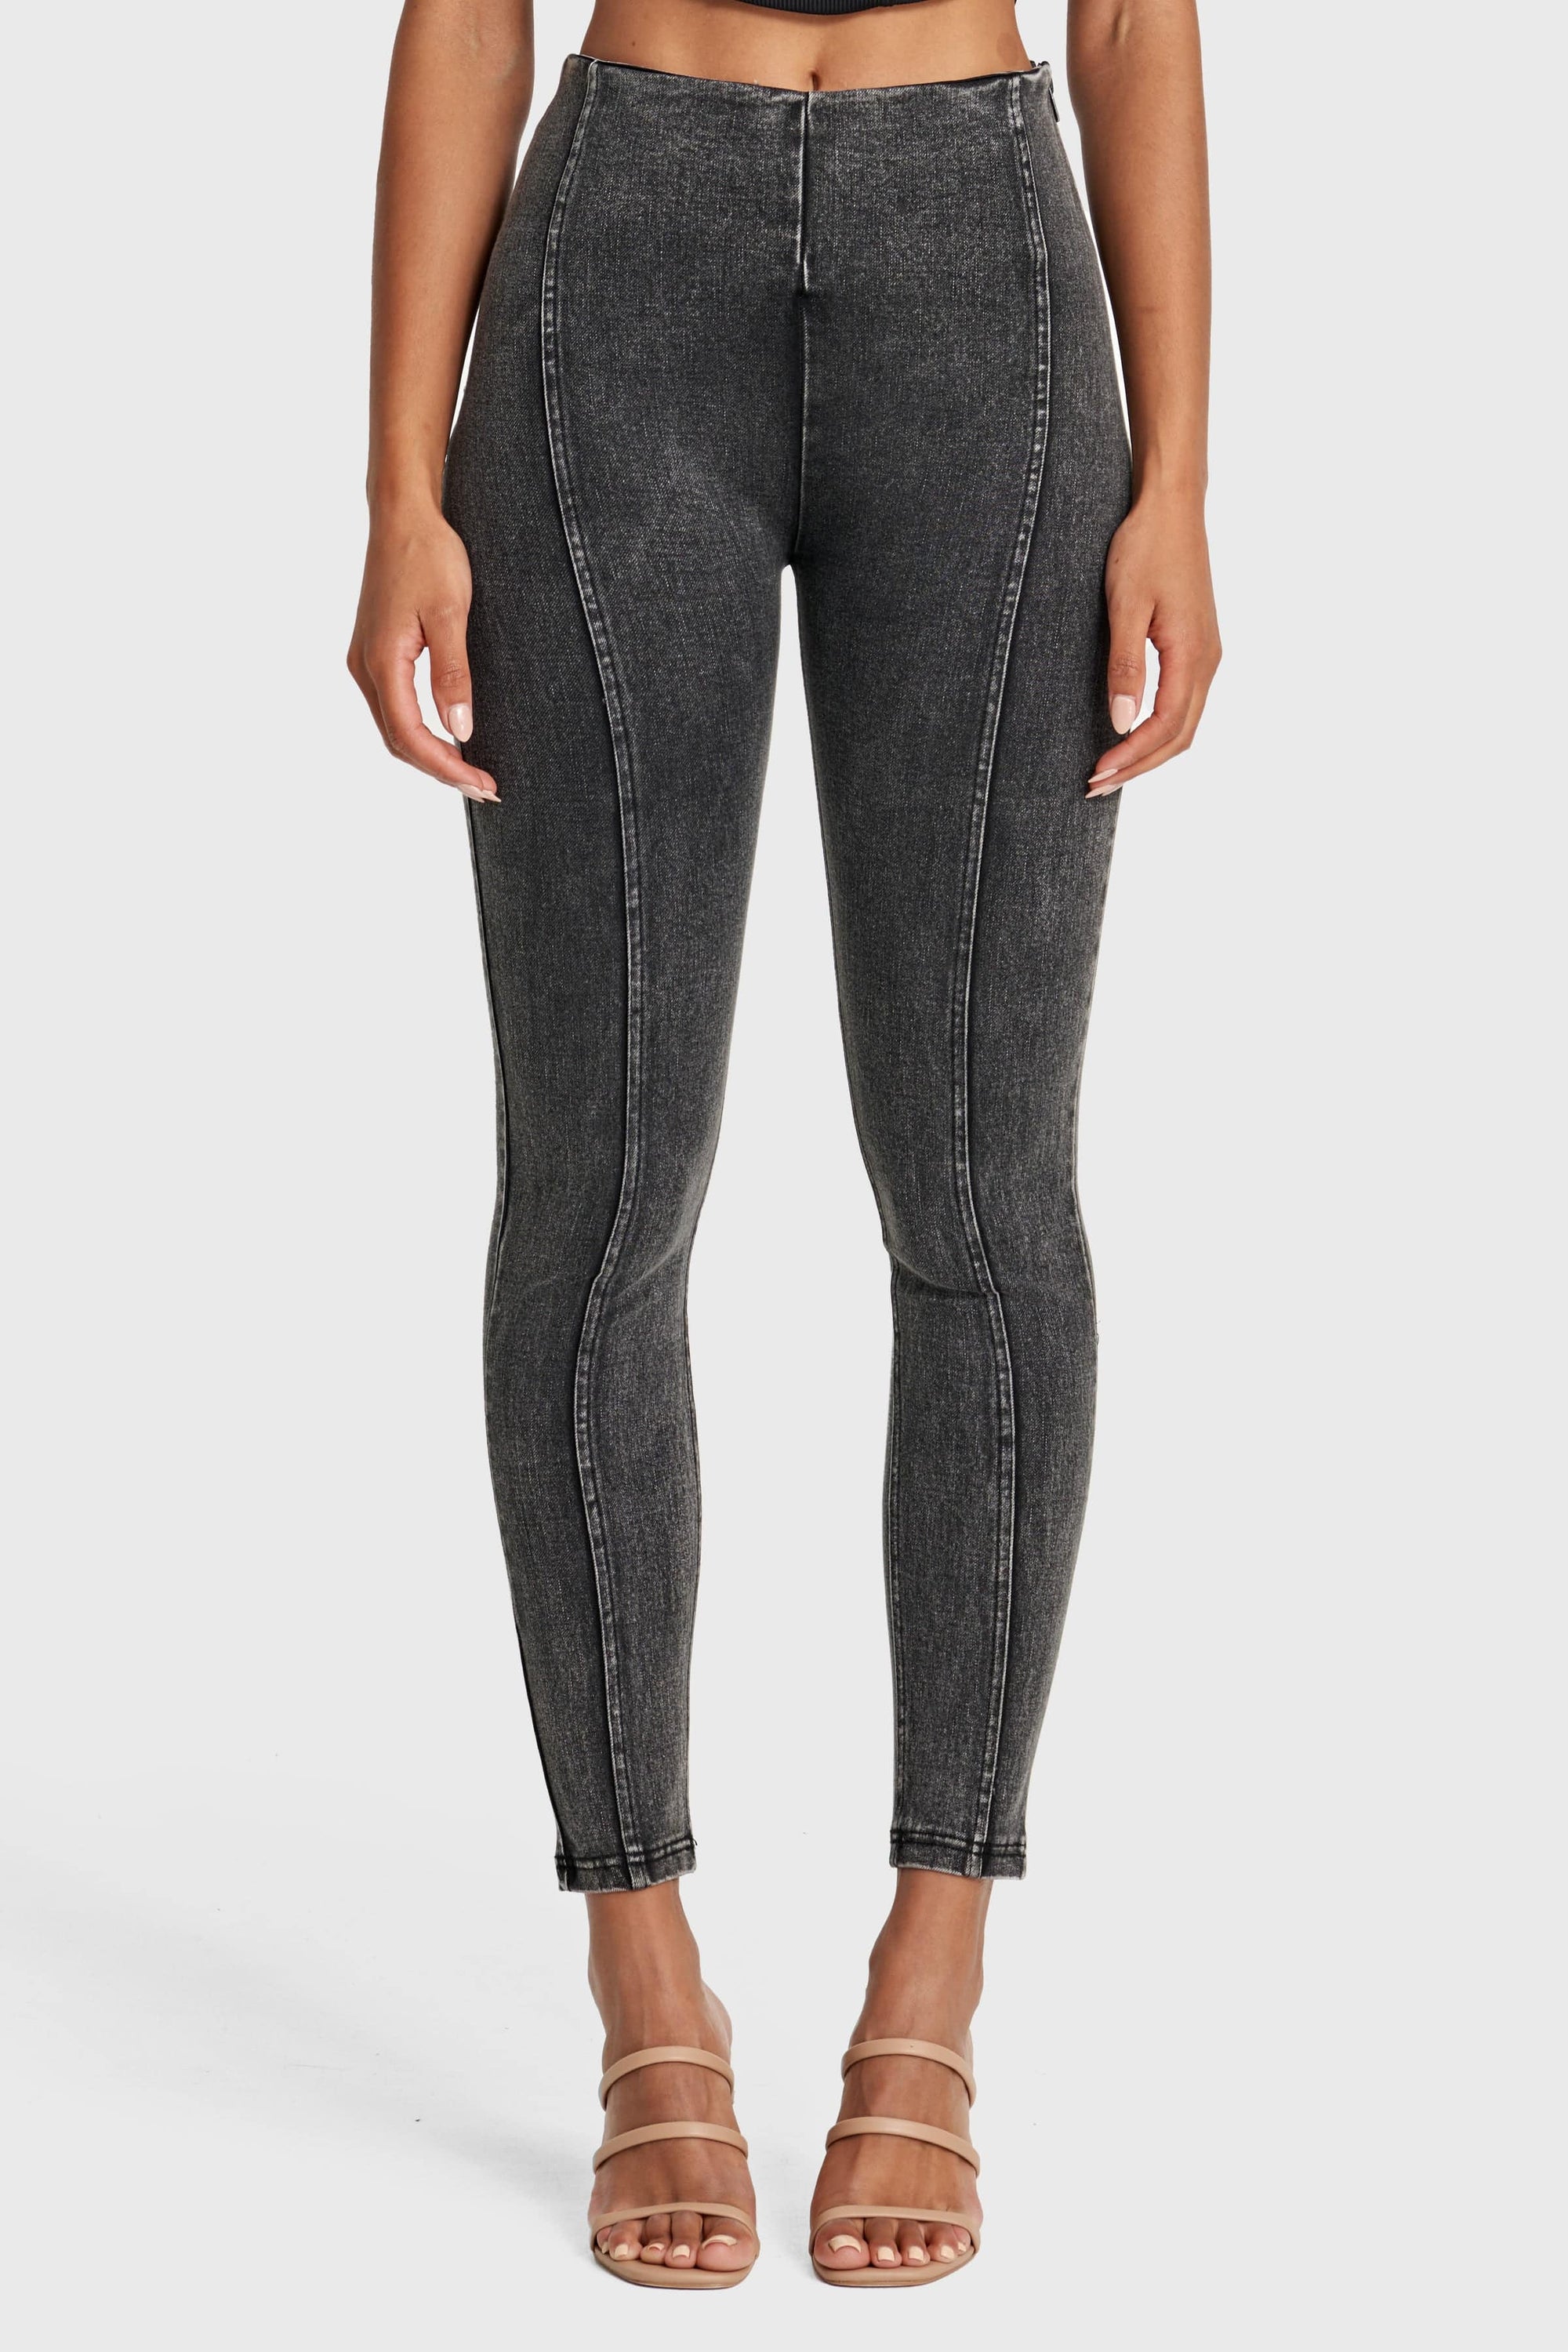 WR.UP® Snug Jeans - High Waisted - Full Length - Washed Black + Black Stitching 11